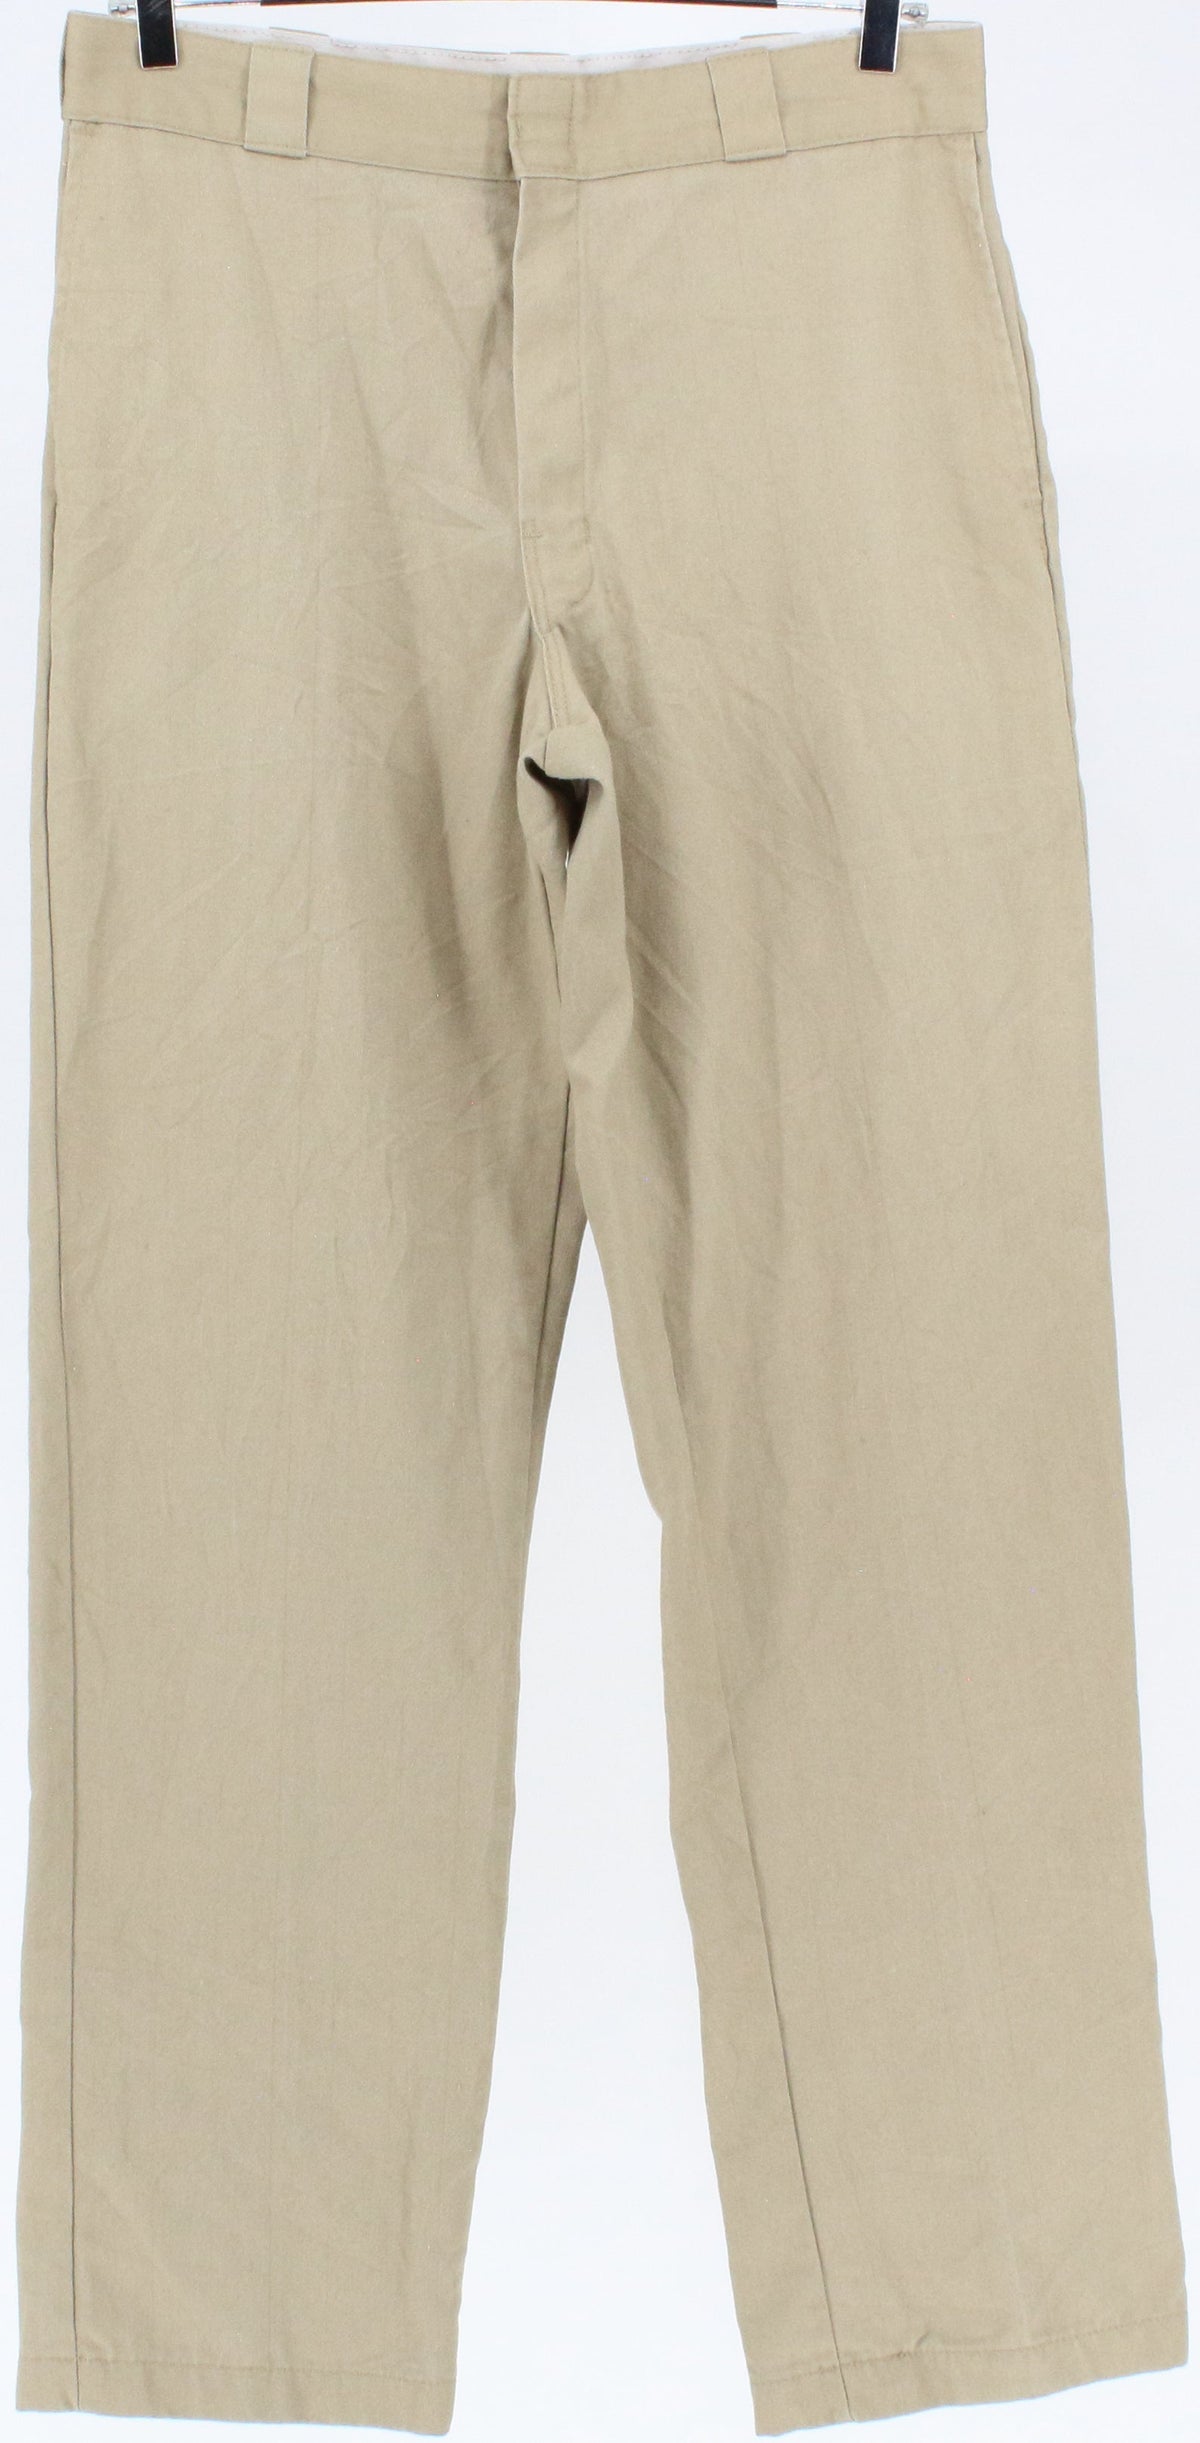 Dickies 874 Original Fit Beige Men's Pants